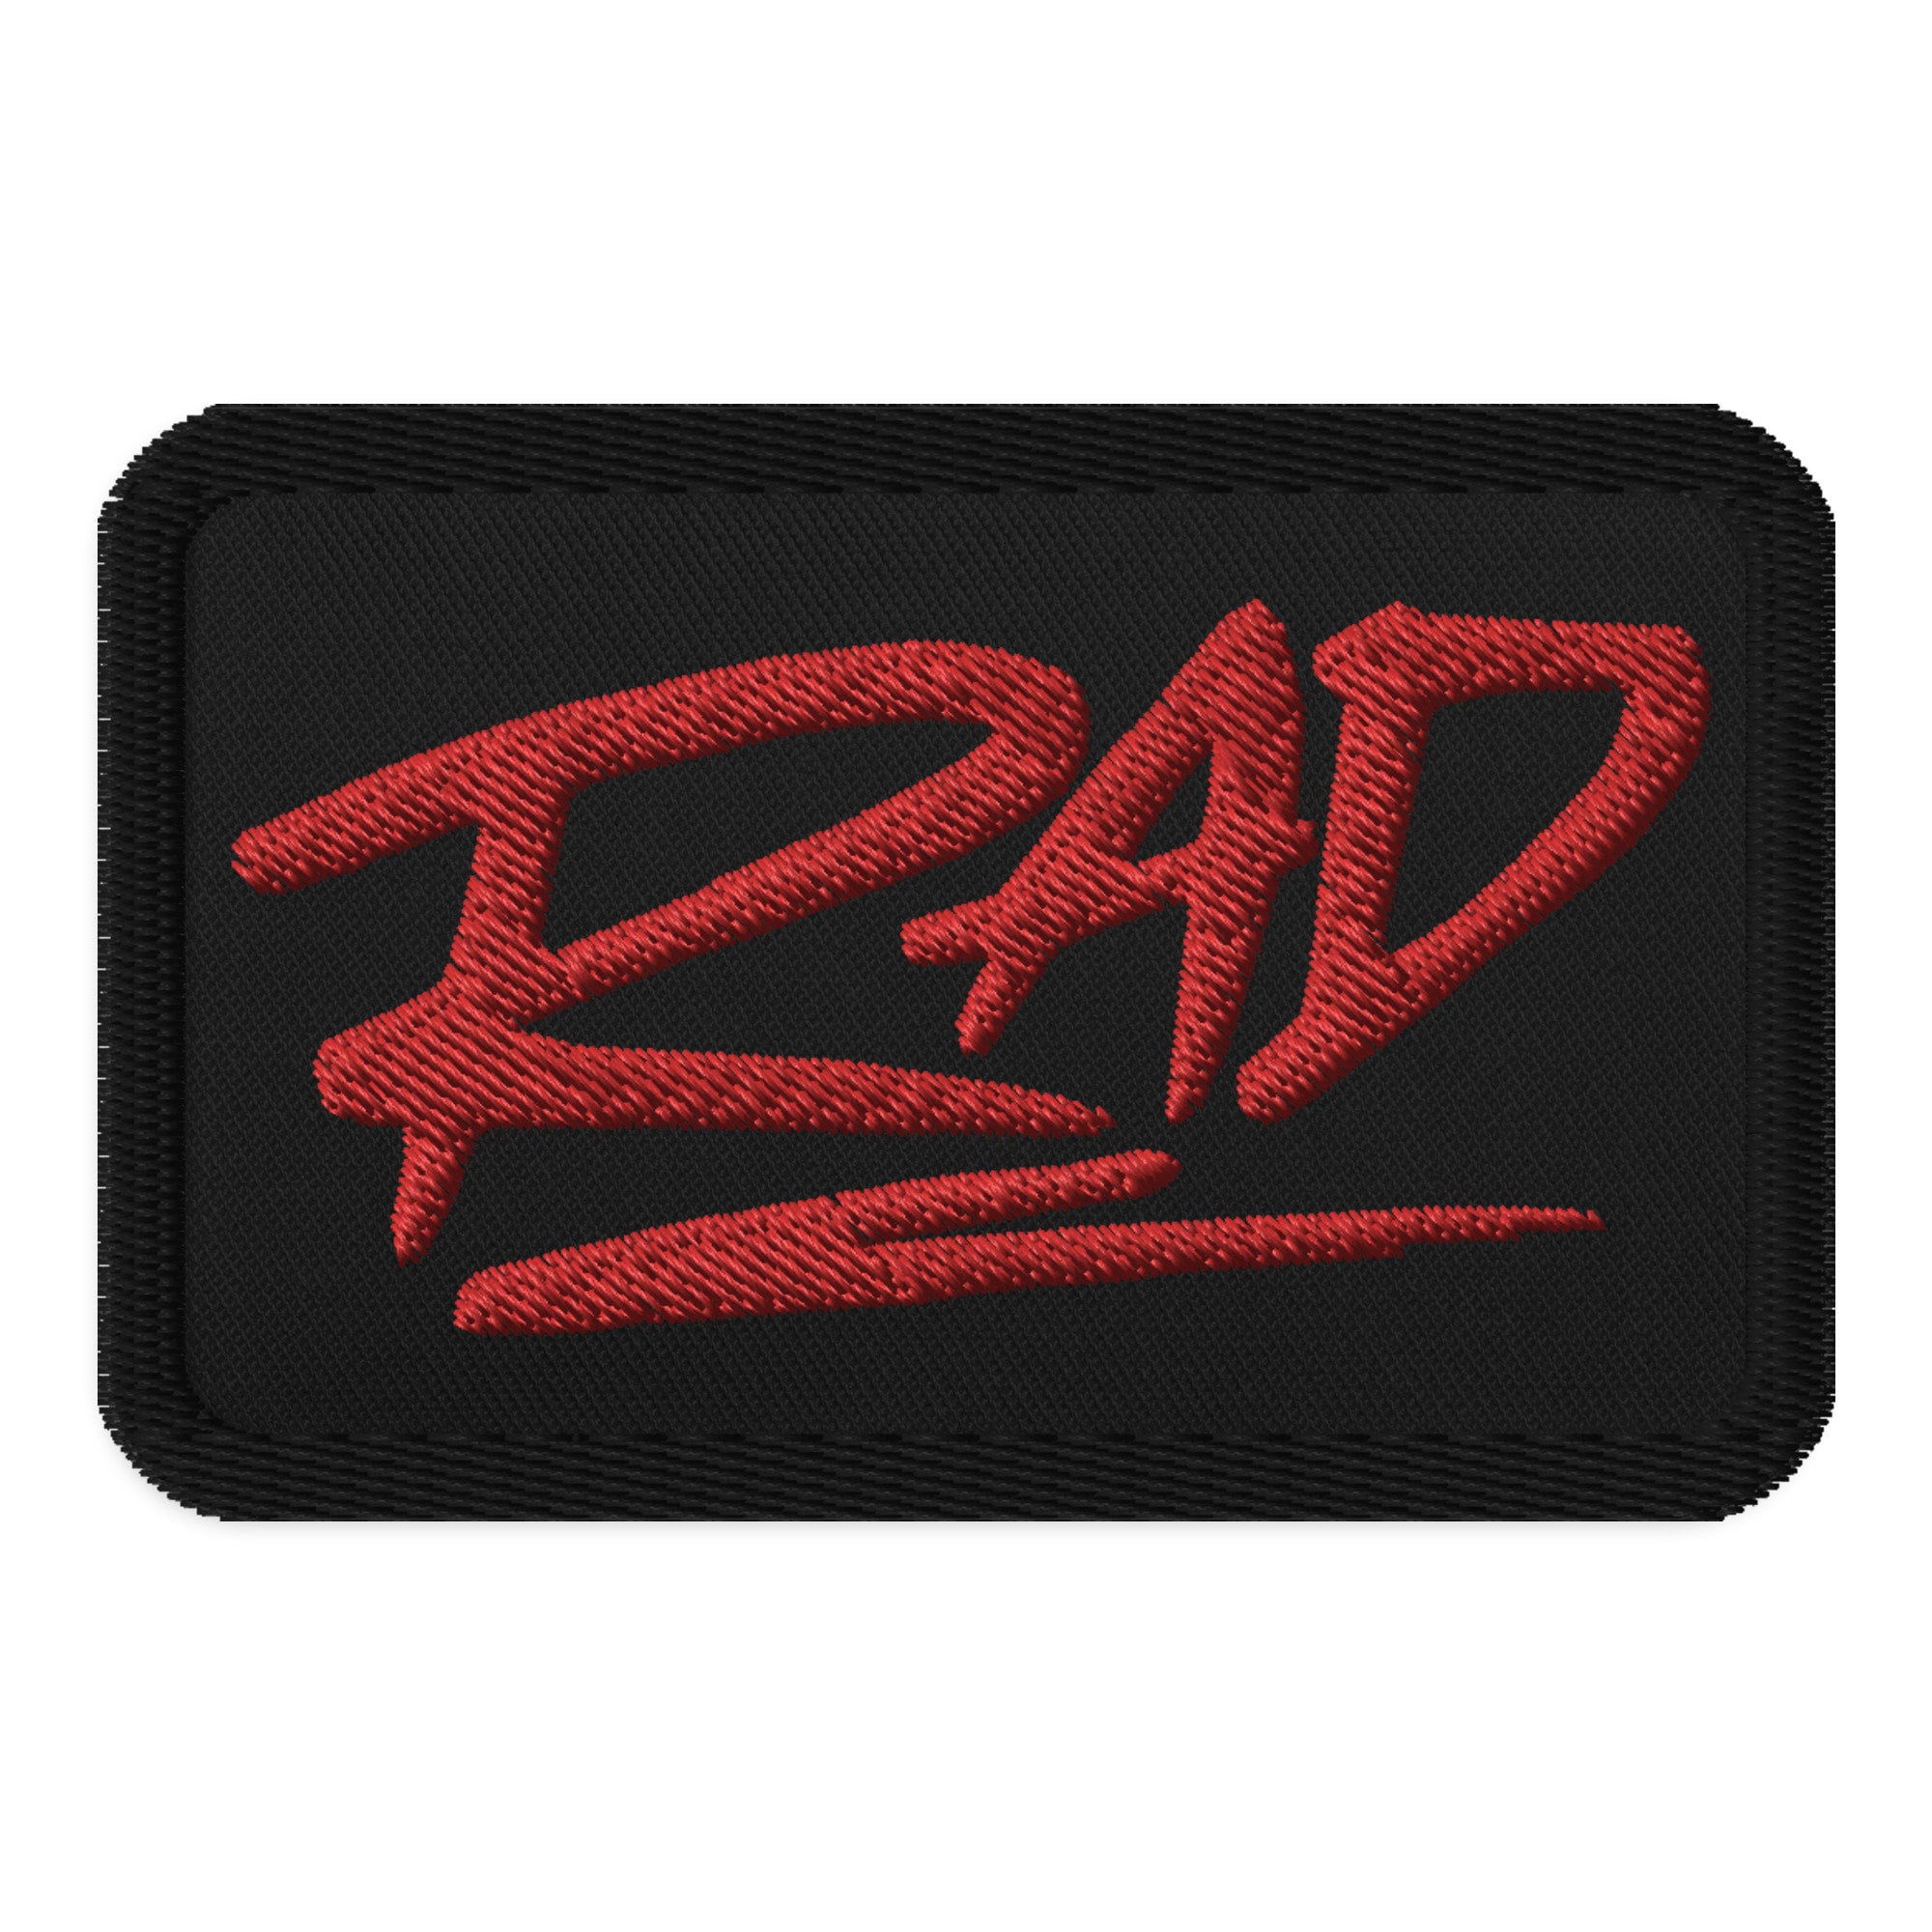 RAD Embroidered Black Patch, 80s, 90s, Radical, BMX, Skateboarder, Skater, Streetwear, Funky, Retro Vibes, Nostalgia, Synthwave, Thrash Punk